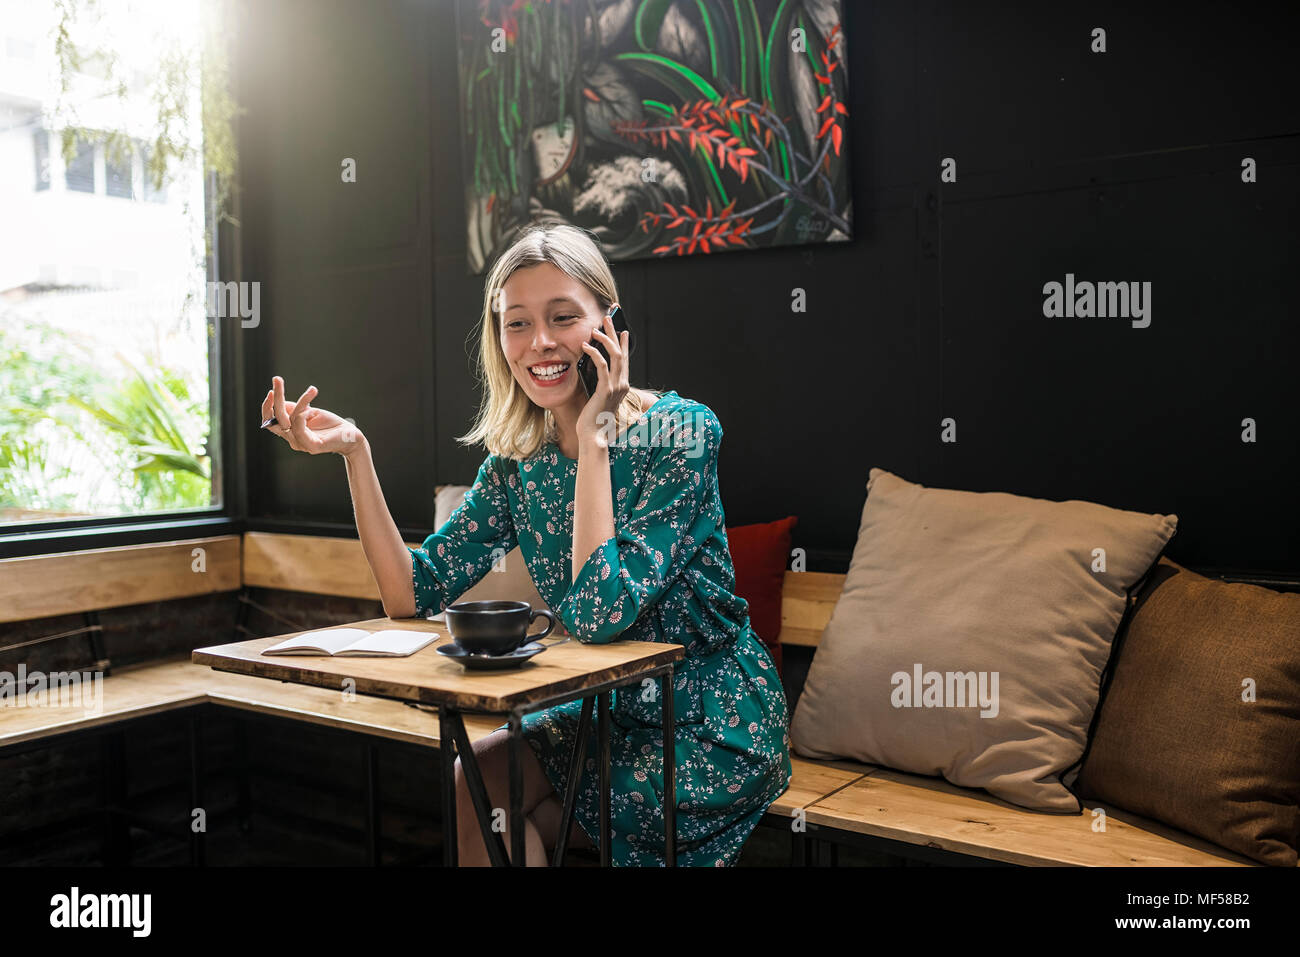 Young smiling woman with green dress sitting in cafe, parler à quelqu'un sur son smartphone Banque D'Images